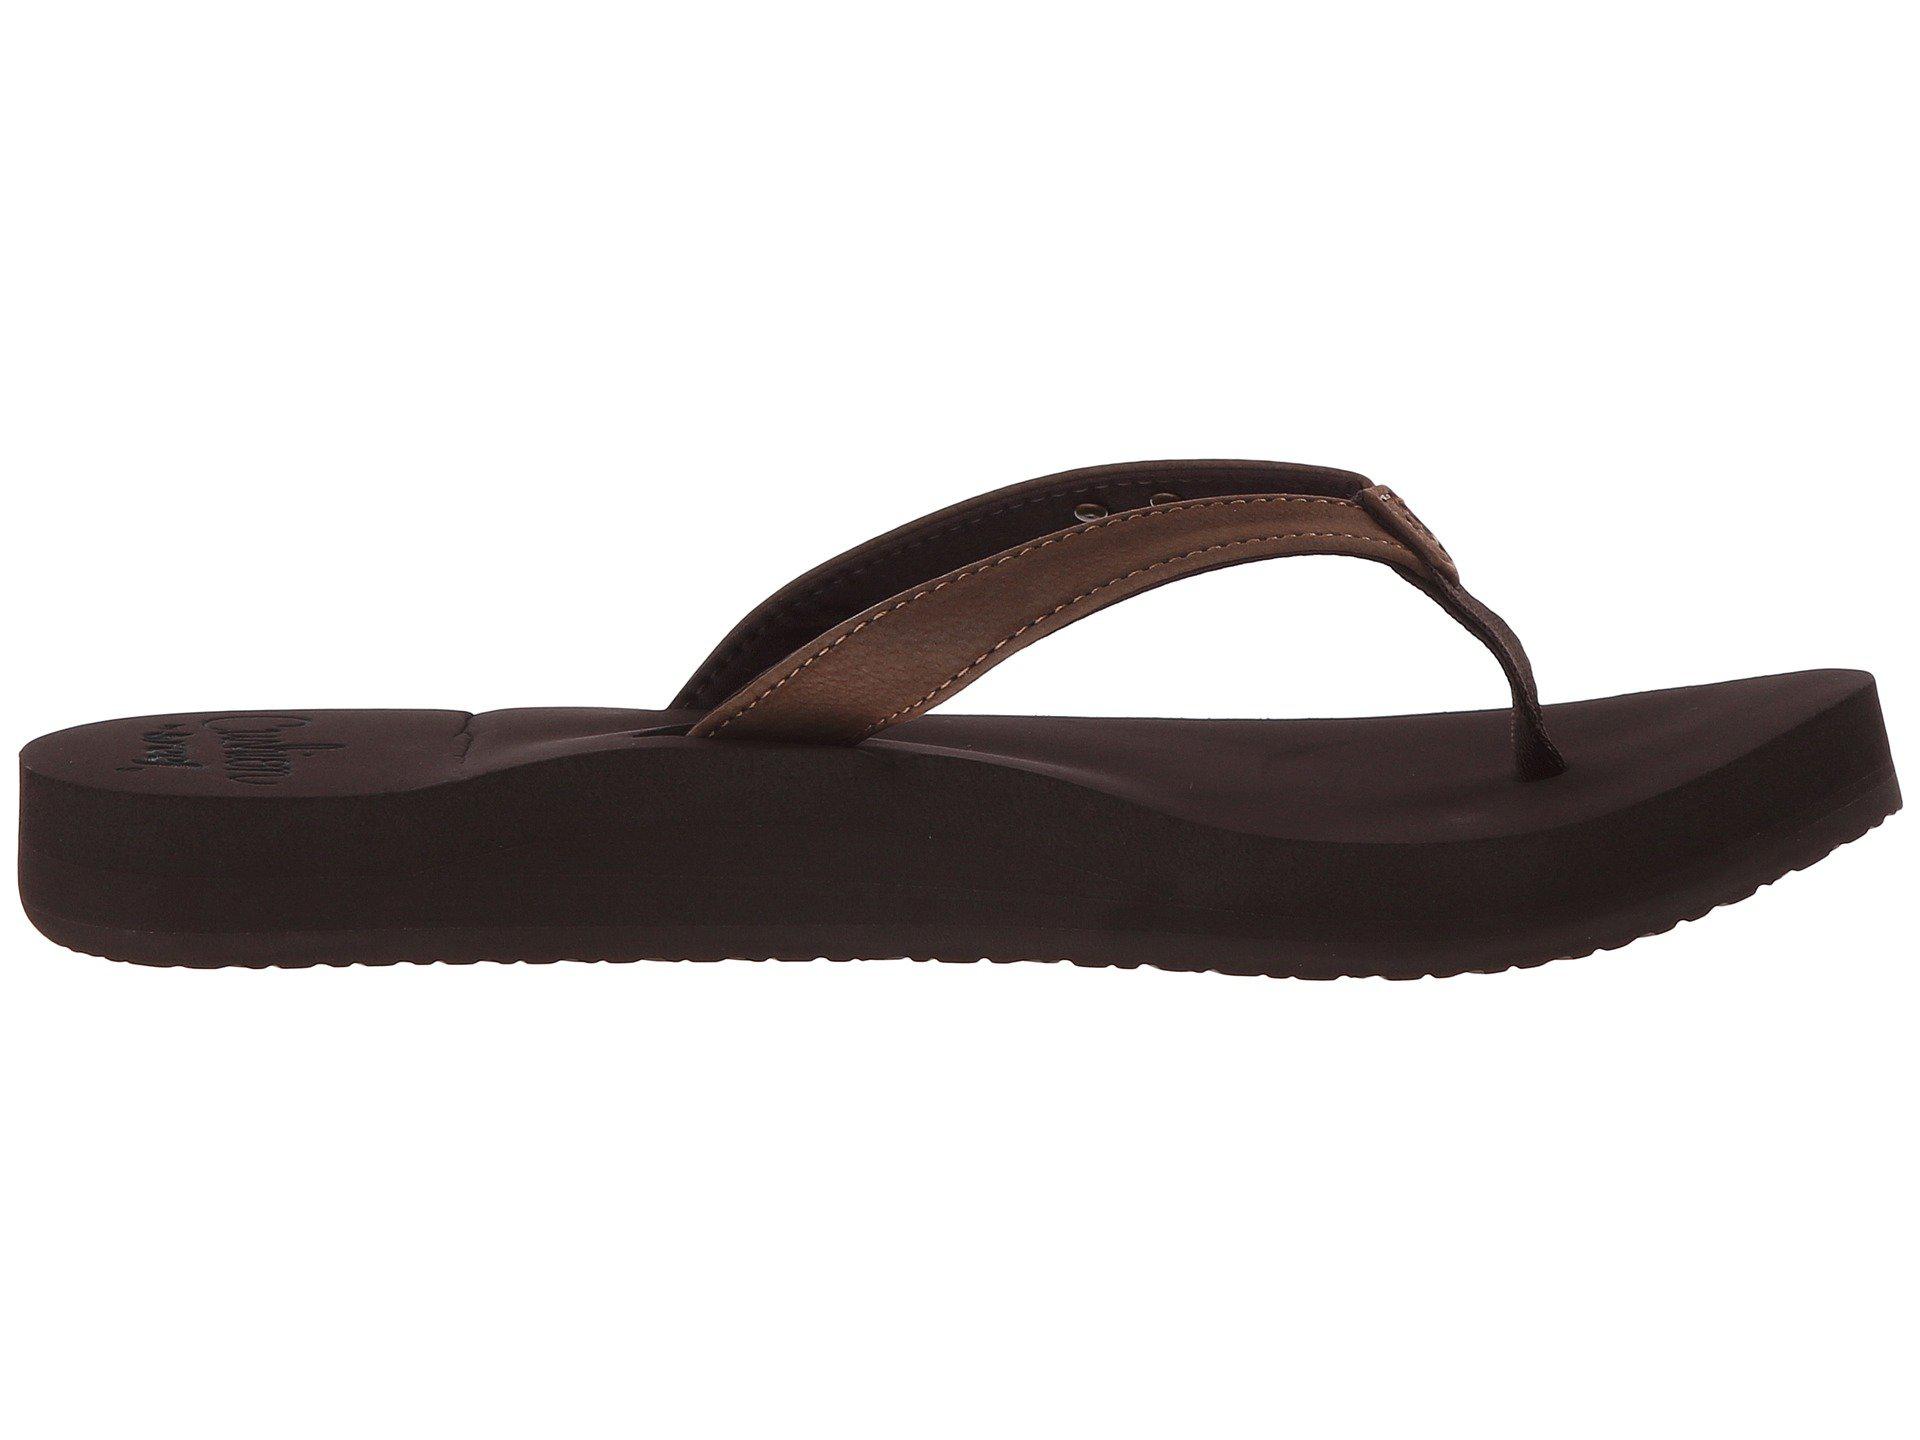 Lyst - Reef Cushion Luna (brown) Women's Sandals in Black